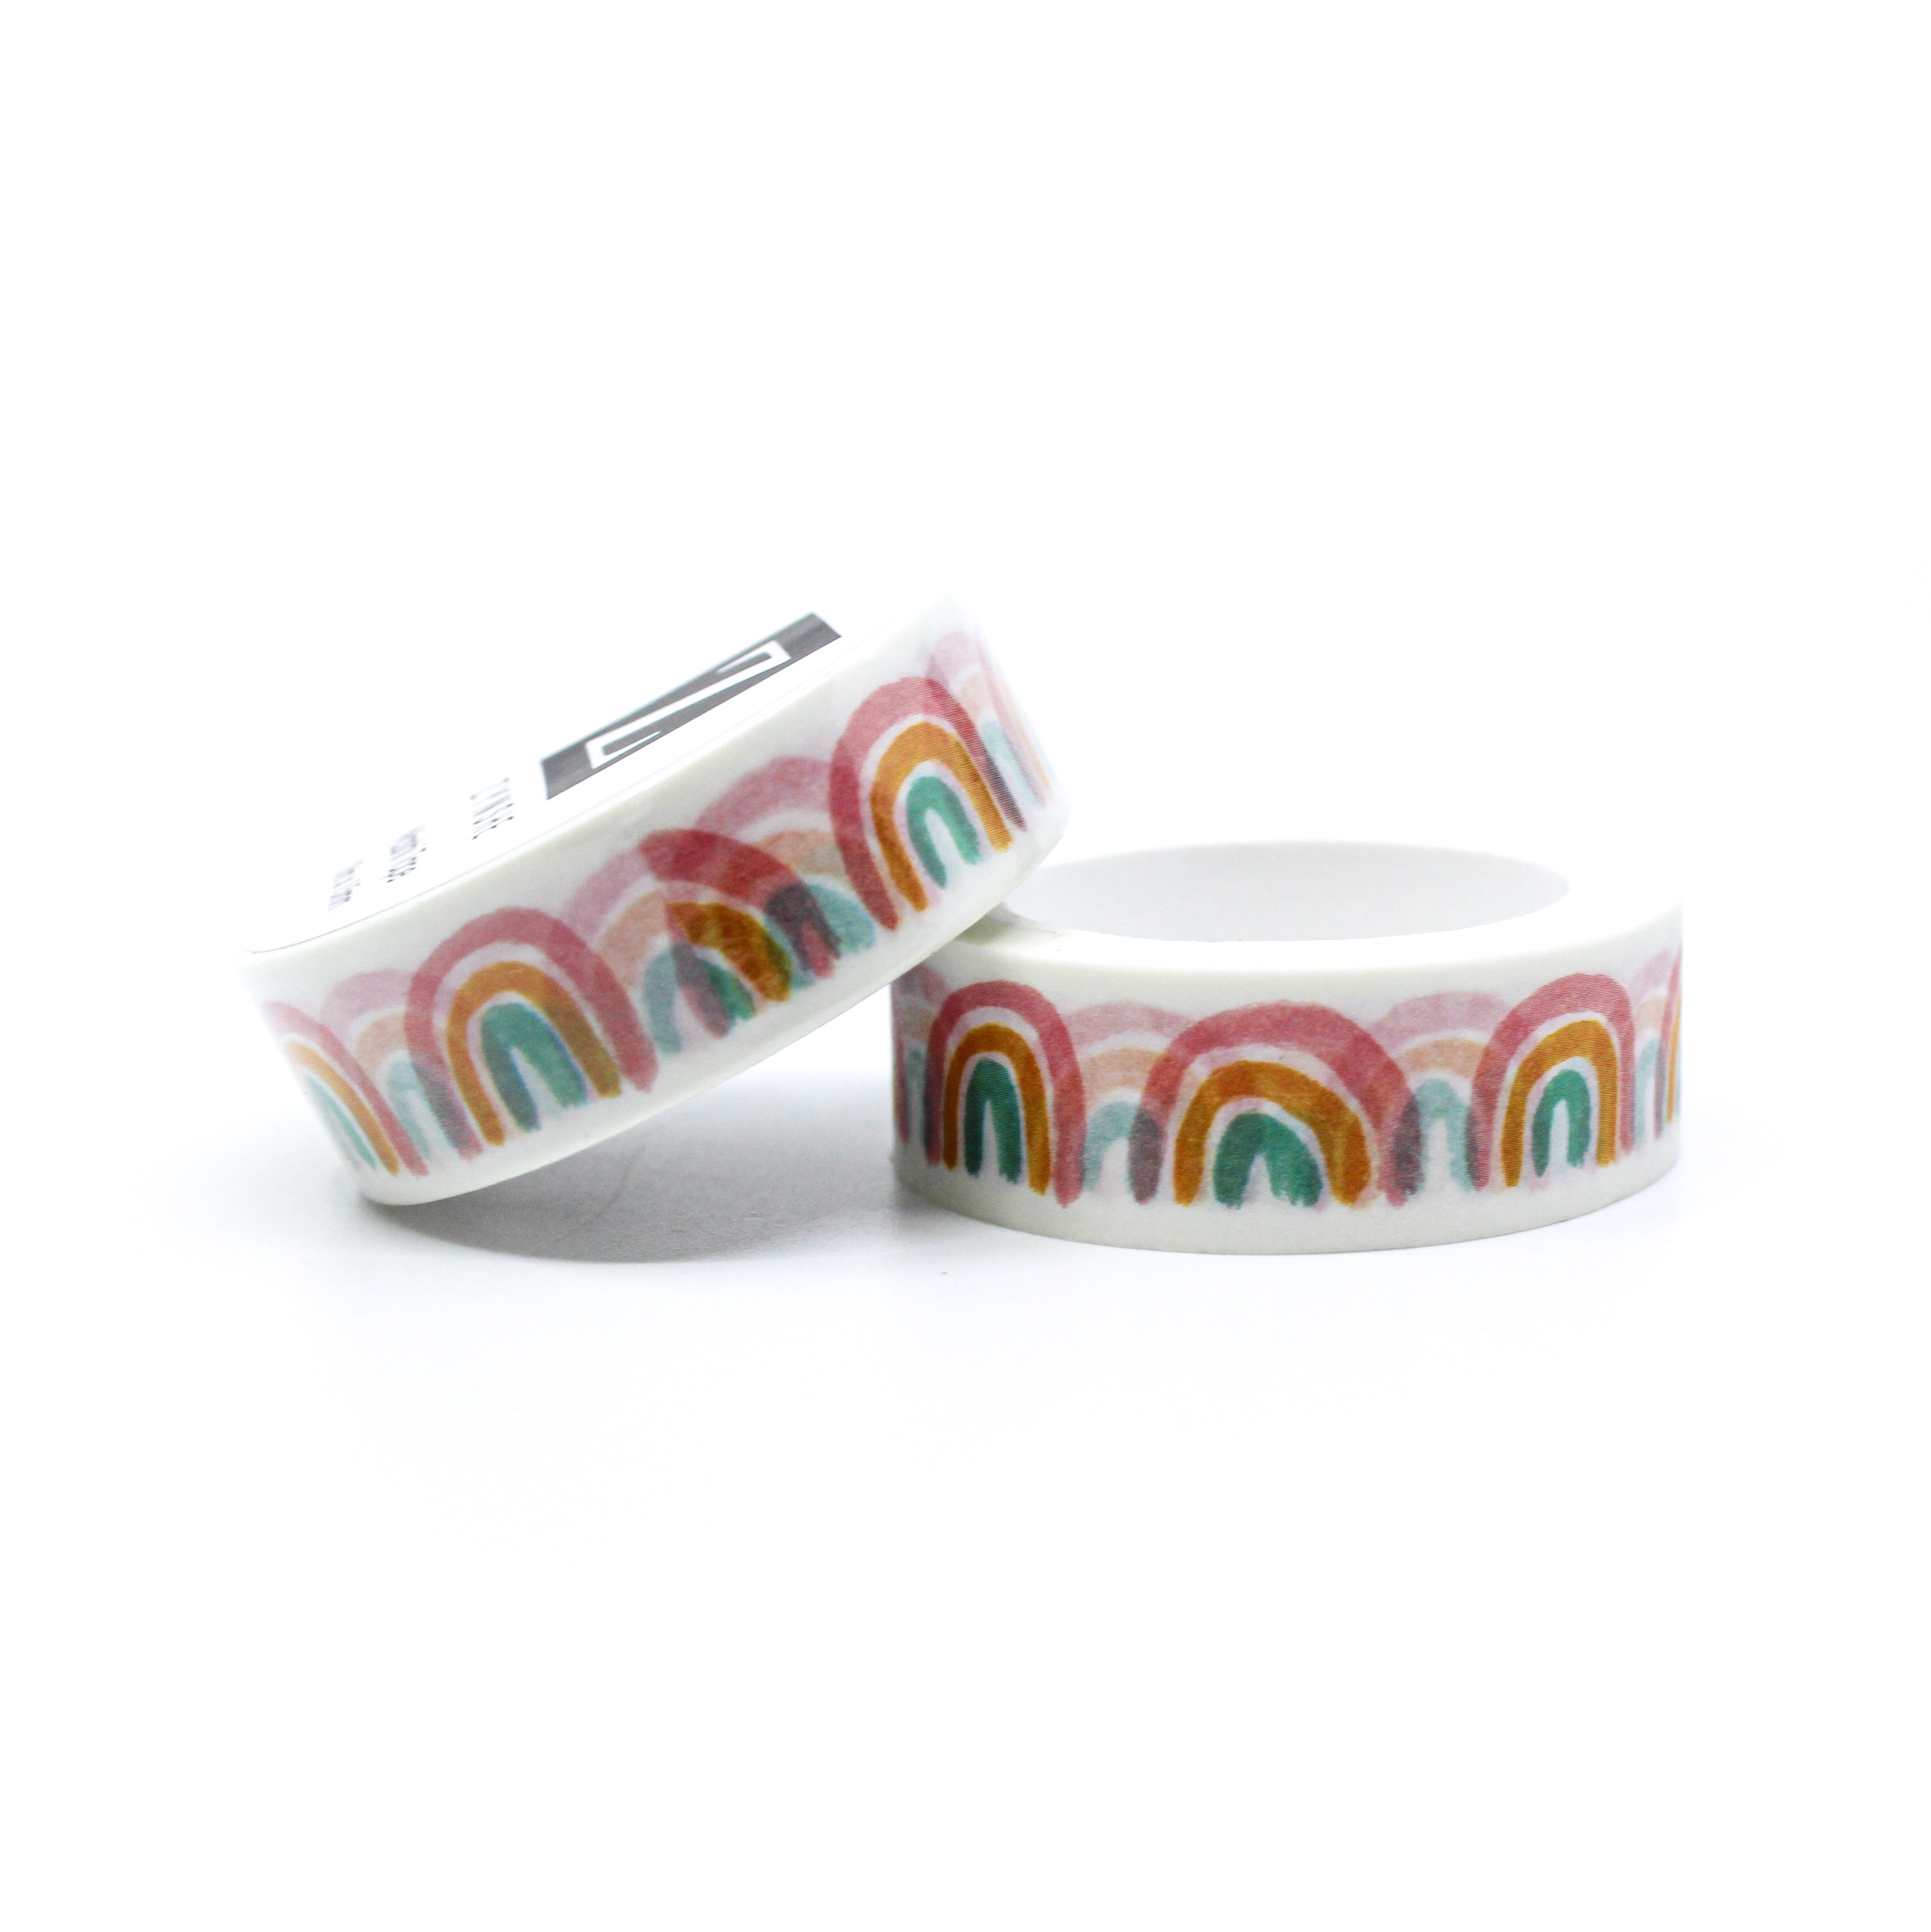 Rainbow stripe washi tape - rainbow tape - masking tape - planner tape -  rainbow stationery - bright tape - paper tape - colour